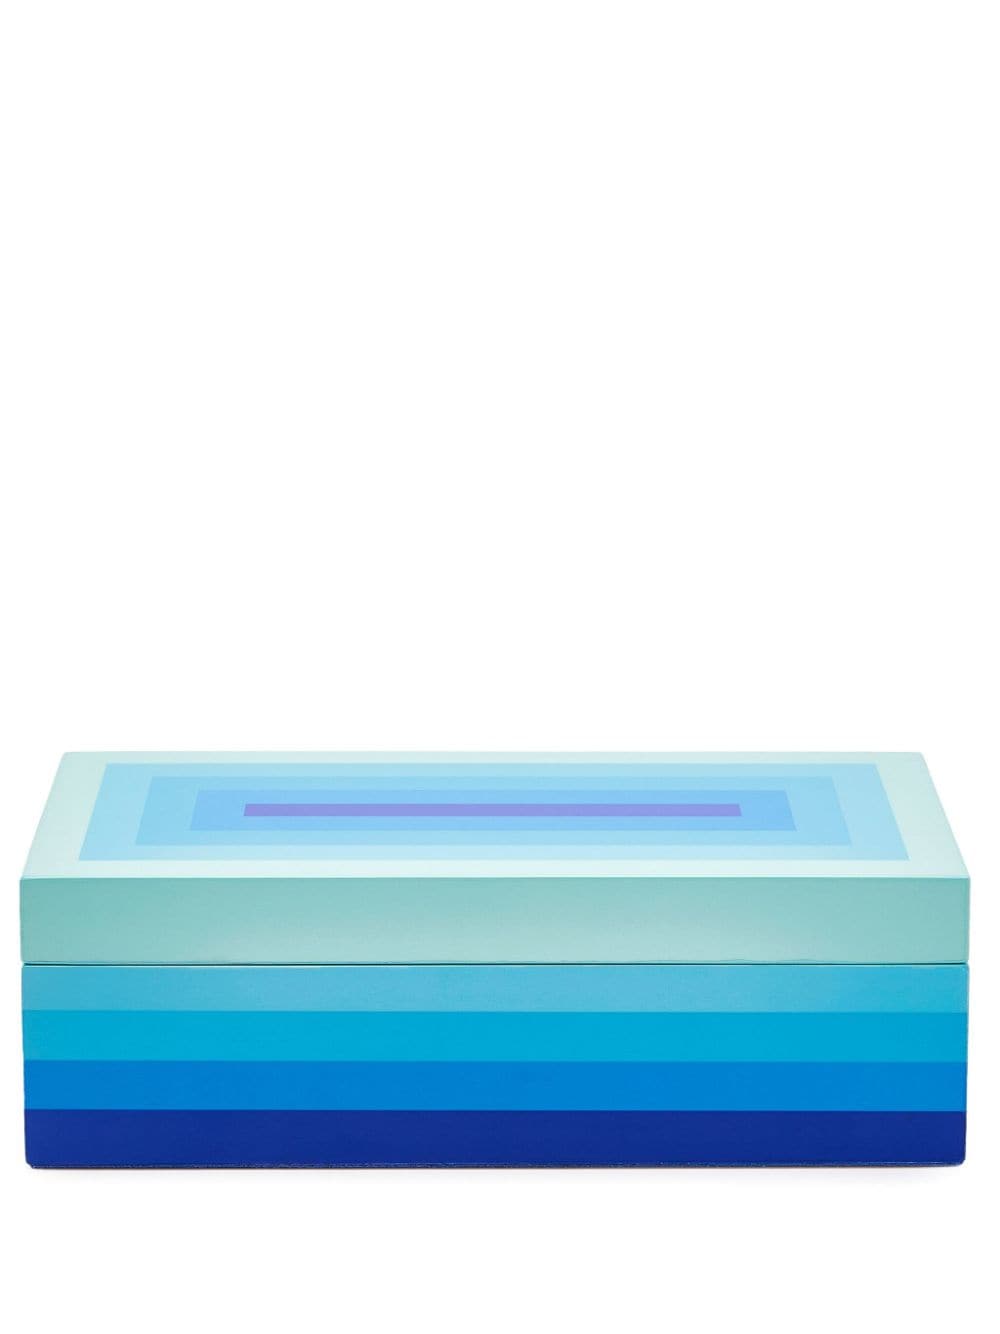 Jonathan Adler Lacquer Scala Porcelain Box In Blue